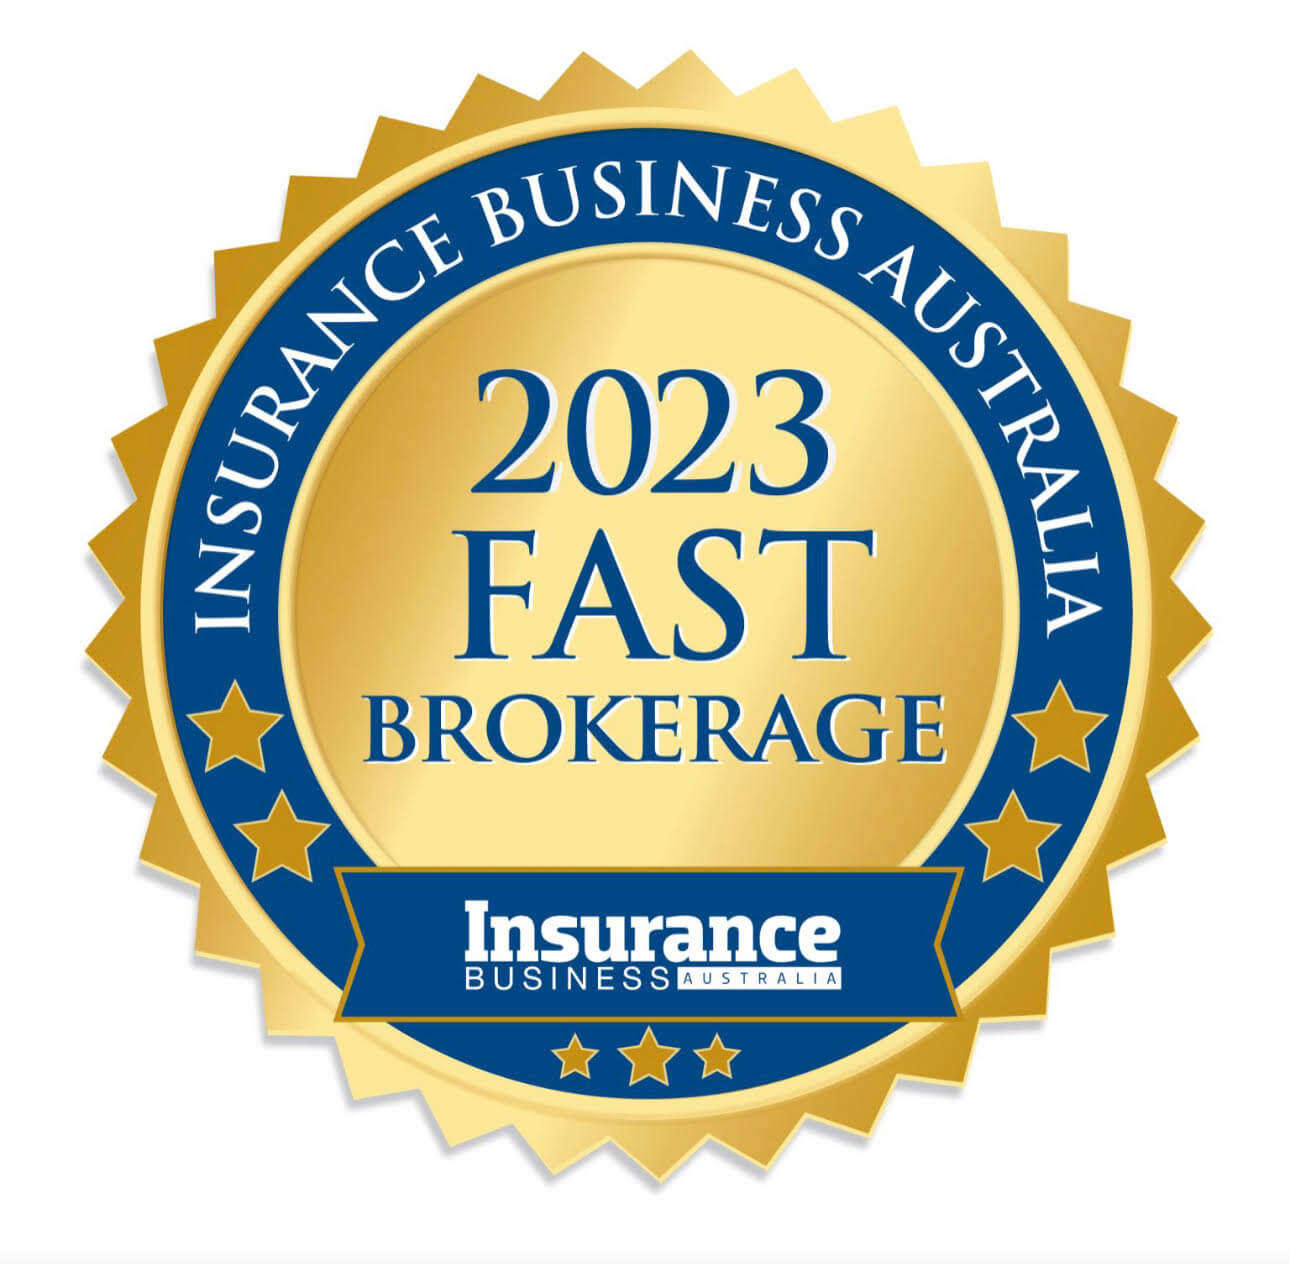 2023 fast brokerage